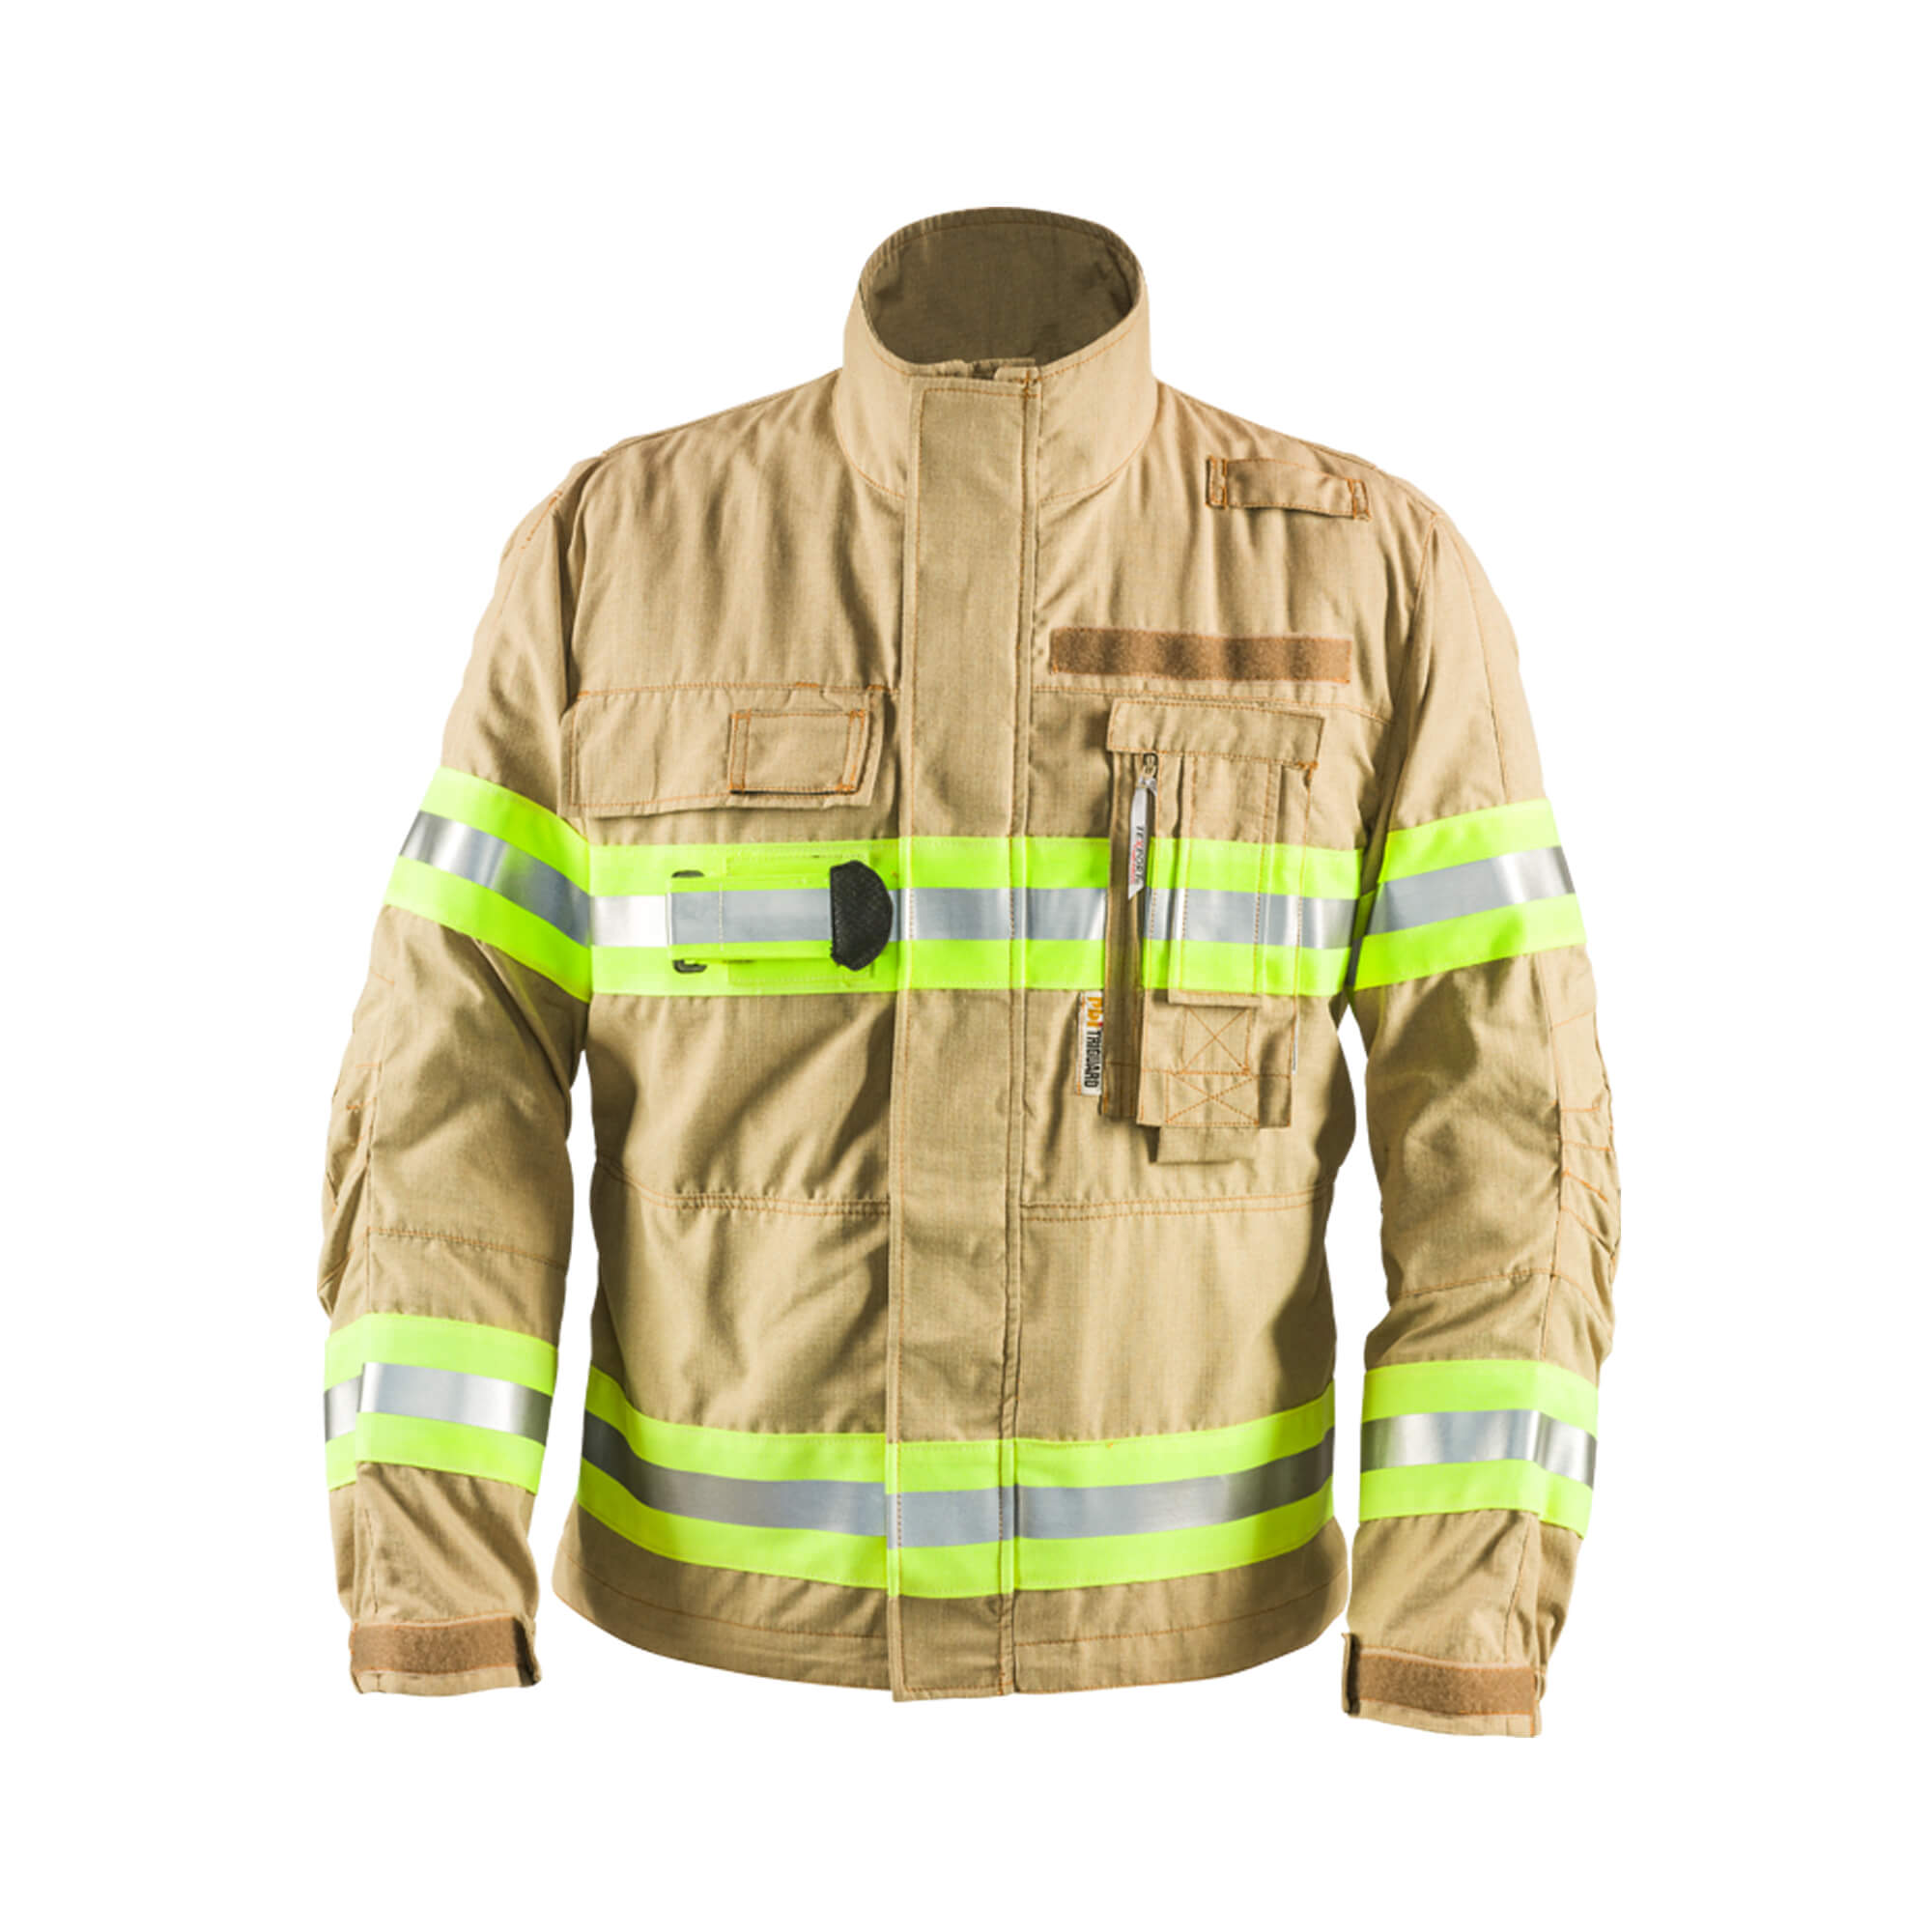 Texport Fire Wildland PBI Suit